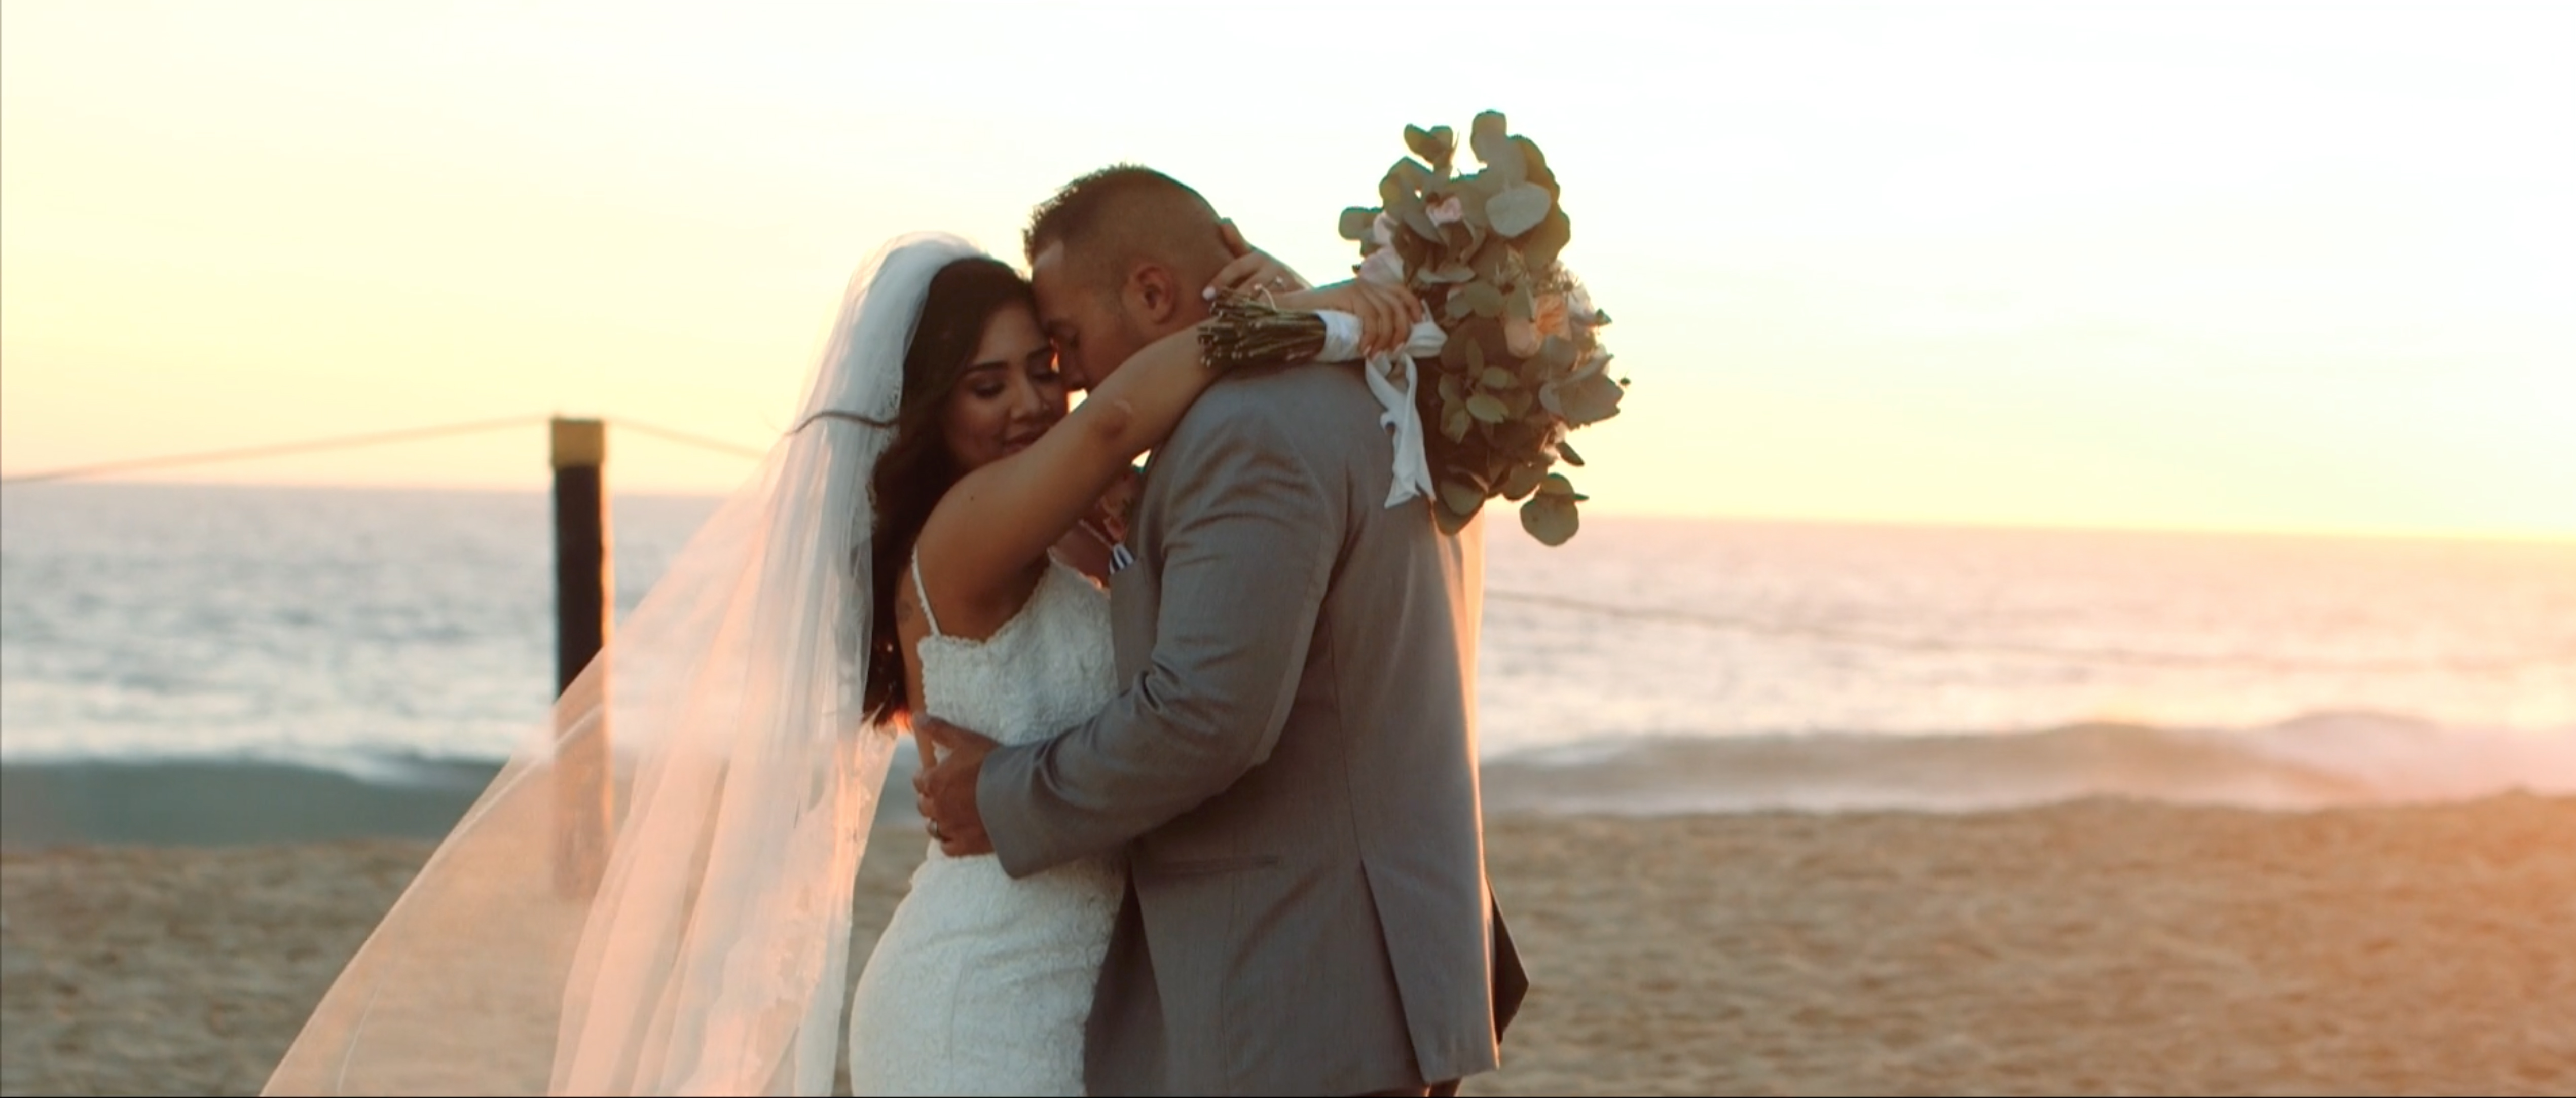 Dallas wedding videographers Brad and Monica Wedding Films